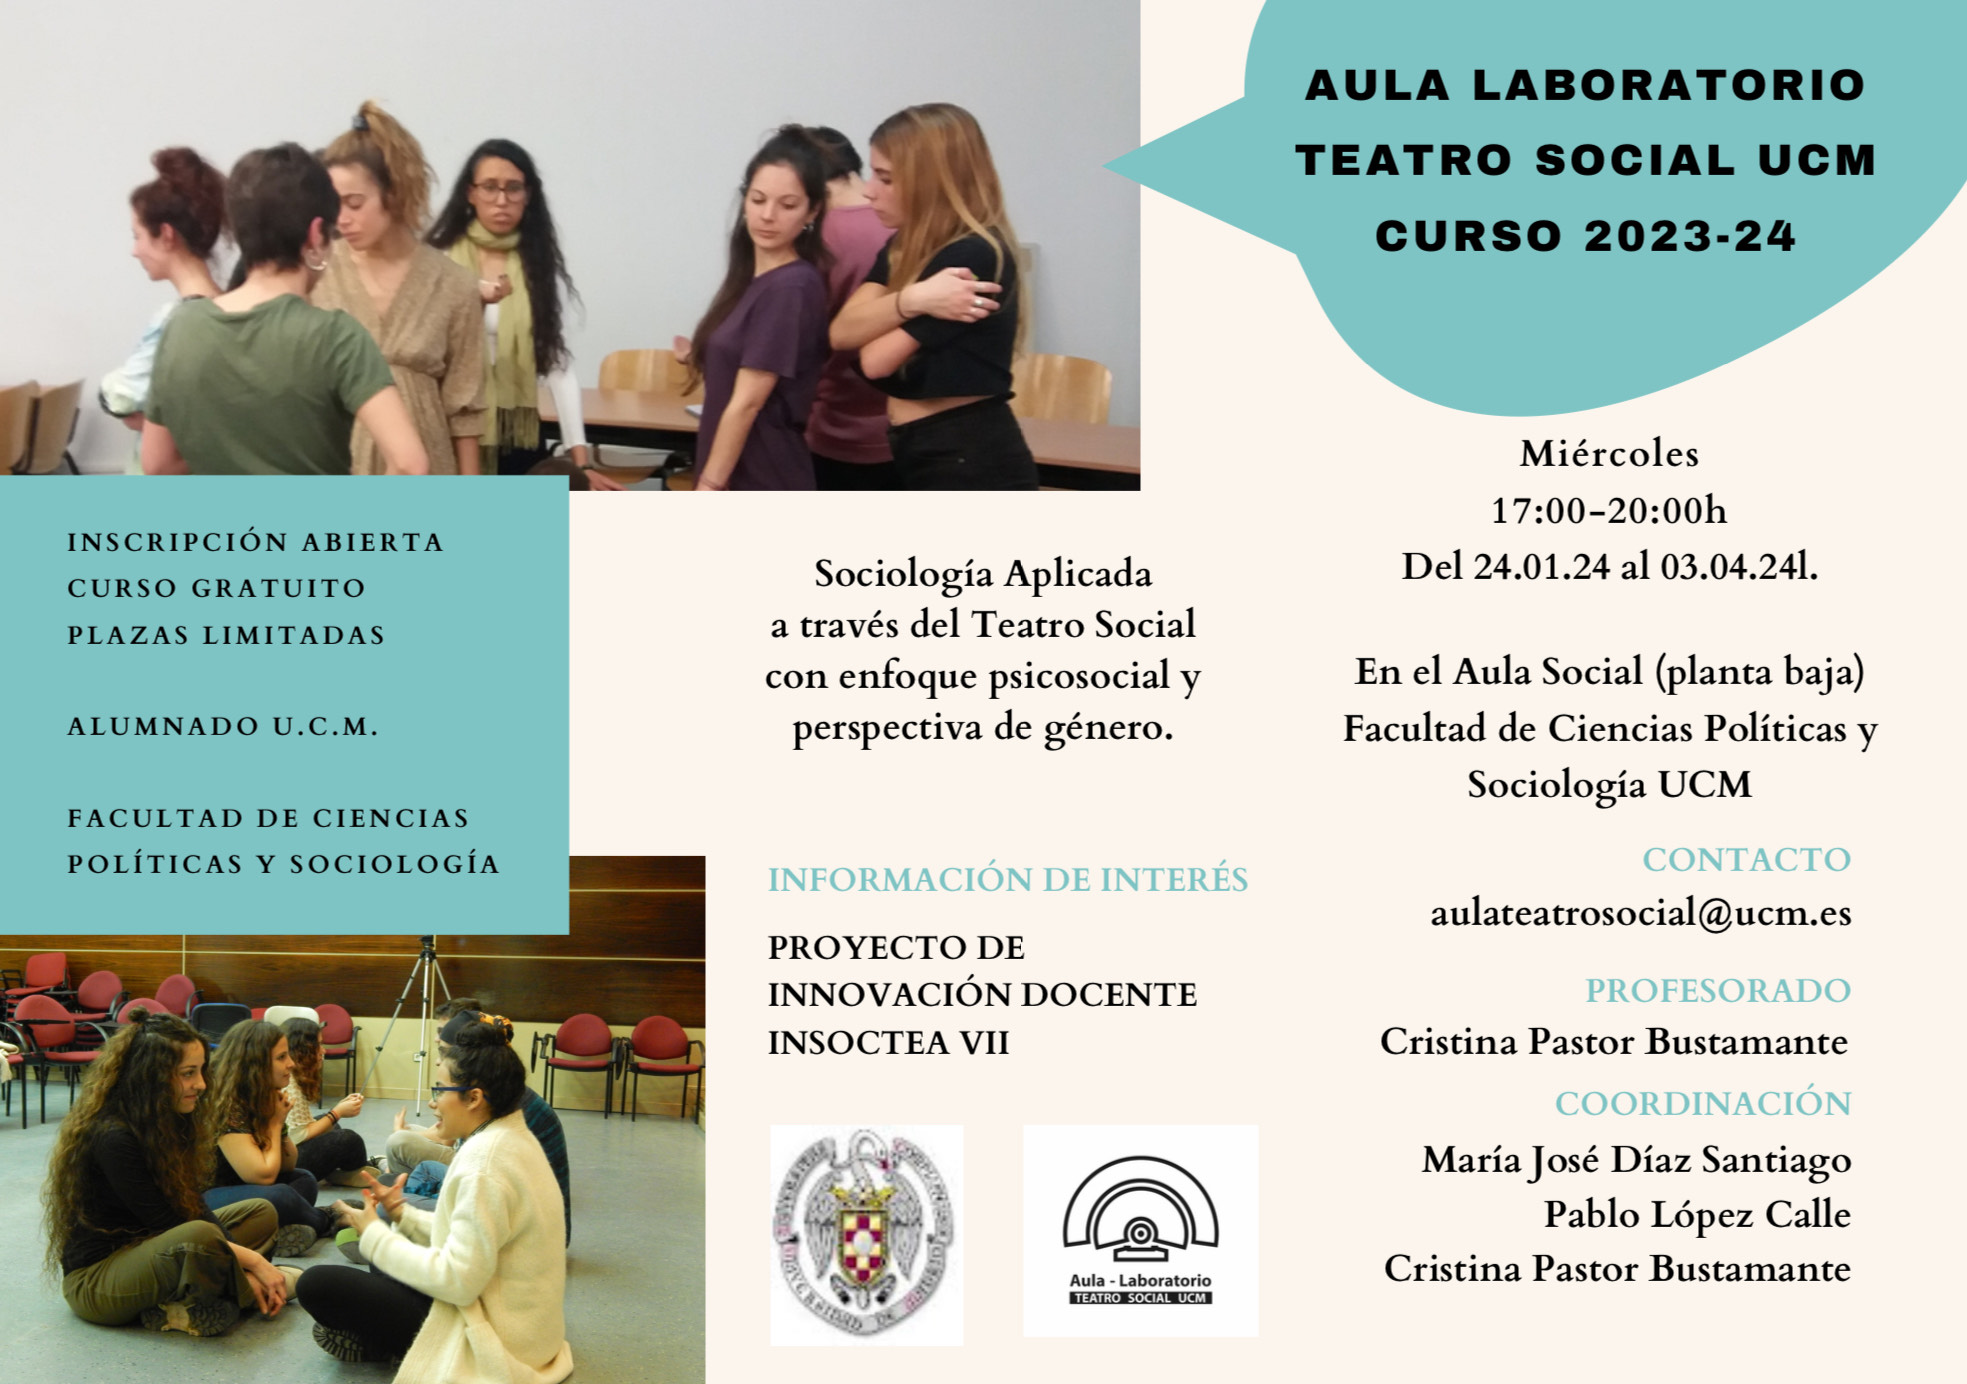 Aula Laboratorio de Teatro Social UCM 2023-24 - 1